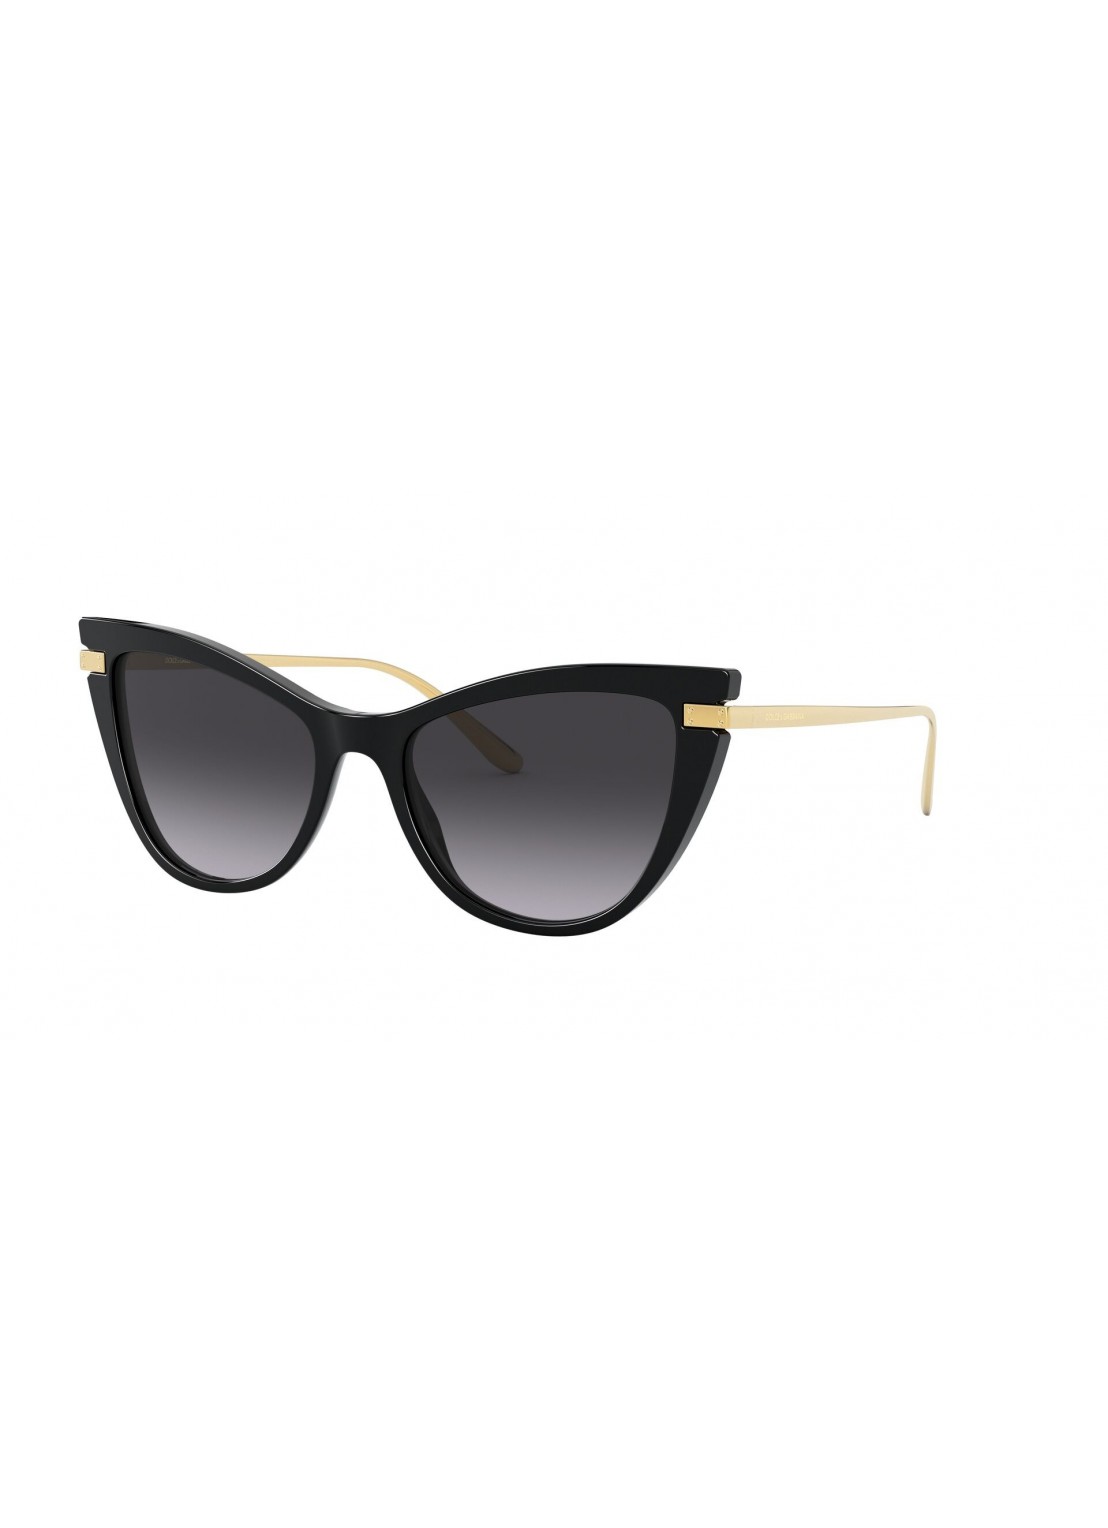 Gafas dolce&gabbana sunglasses woman 0dg4384 0dg4384 501 8g talla transparente
 